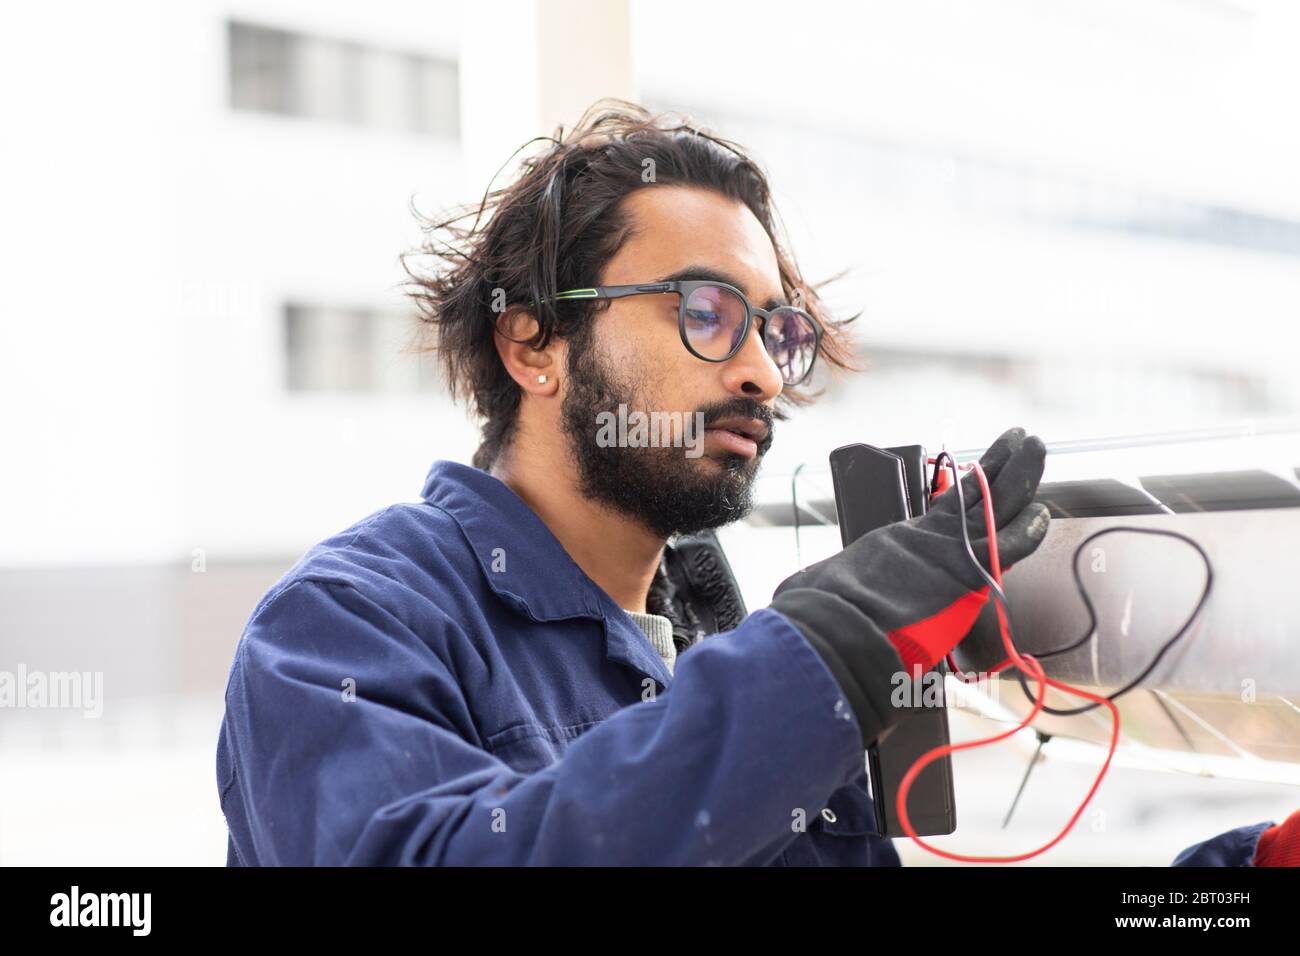 Bearded man wearing eyeglasses working on construction site. Stock Photo